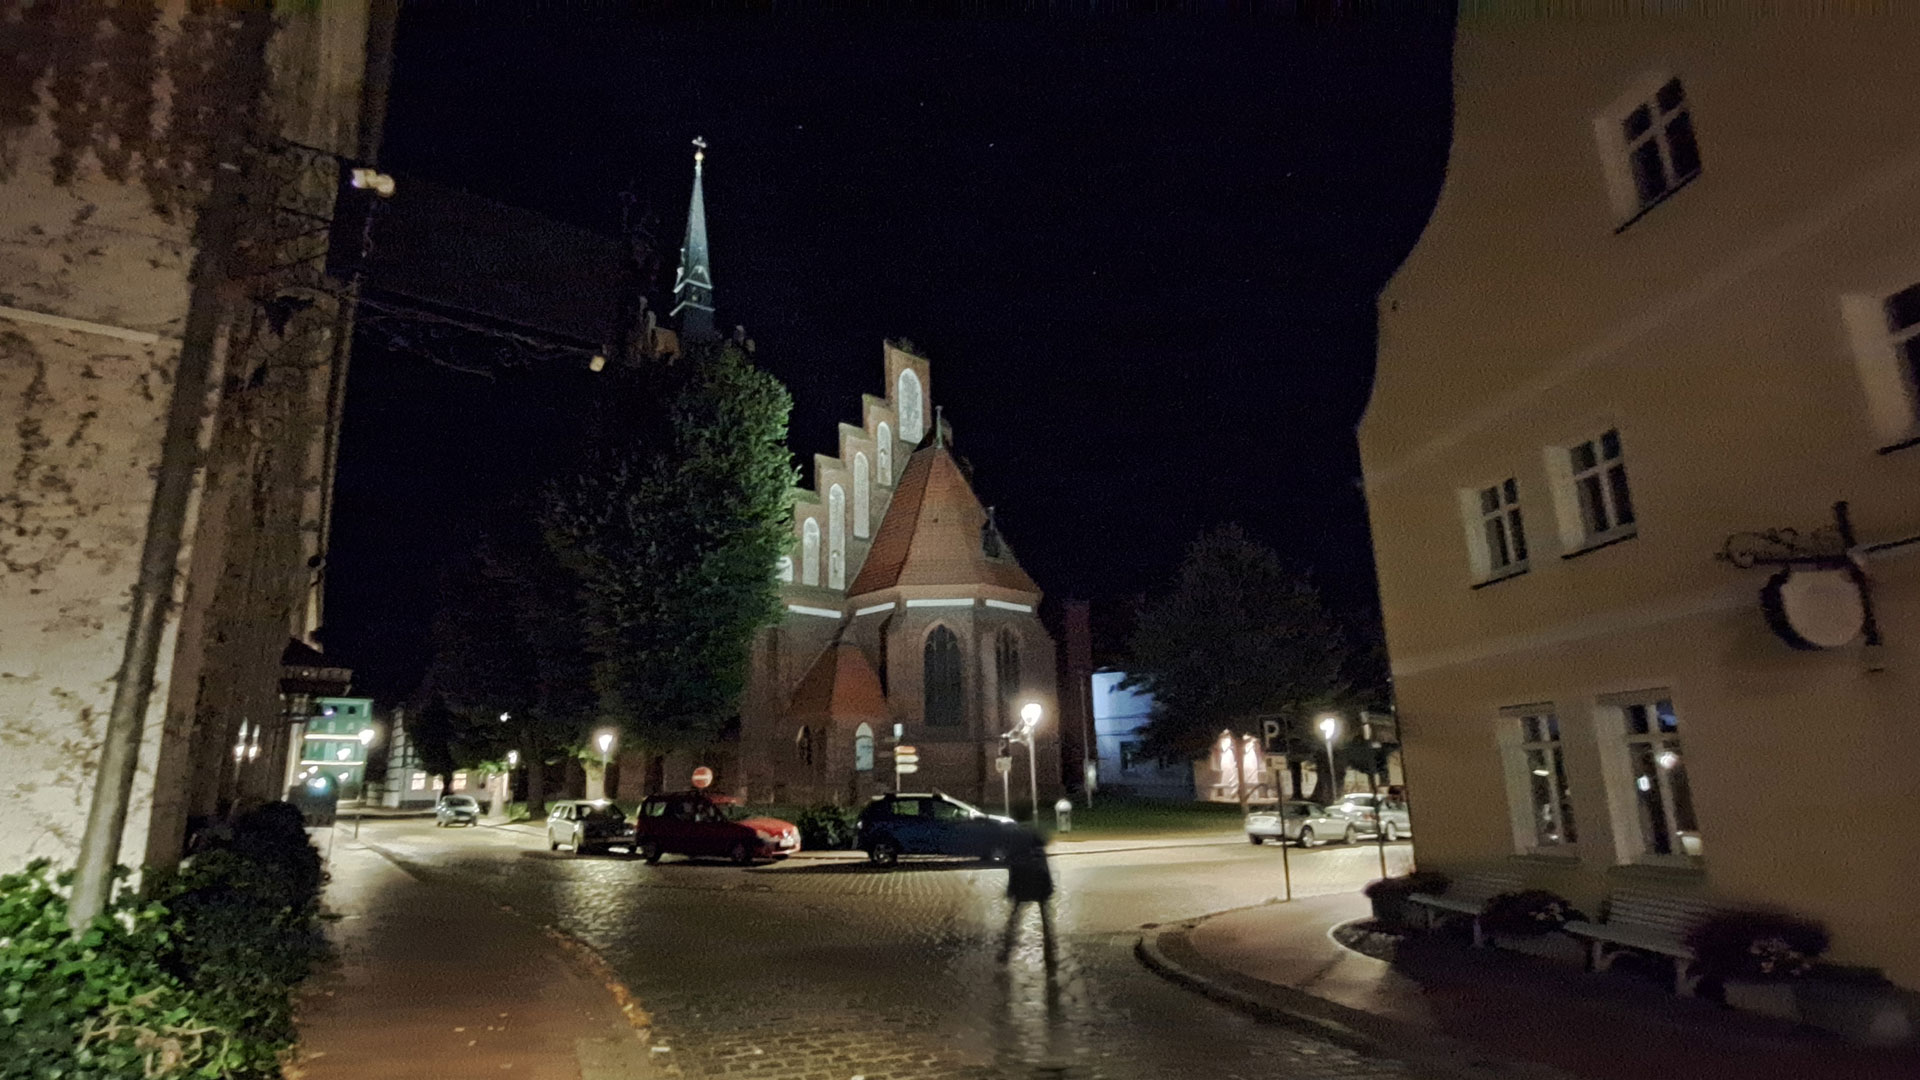 20230920_Usedom_Kirche_Nacht_1920x1080.jpg